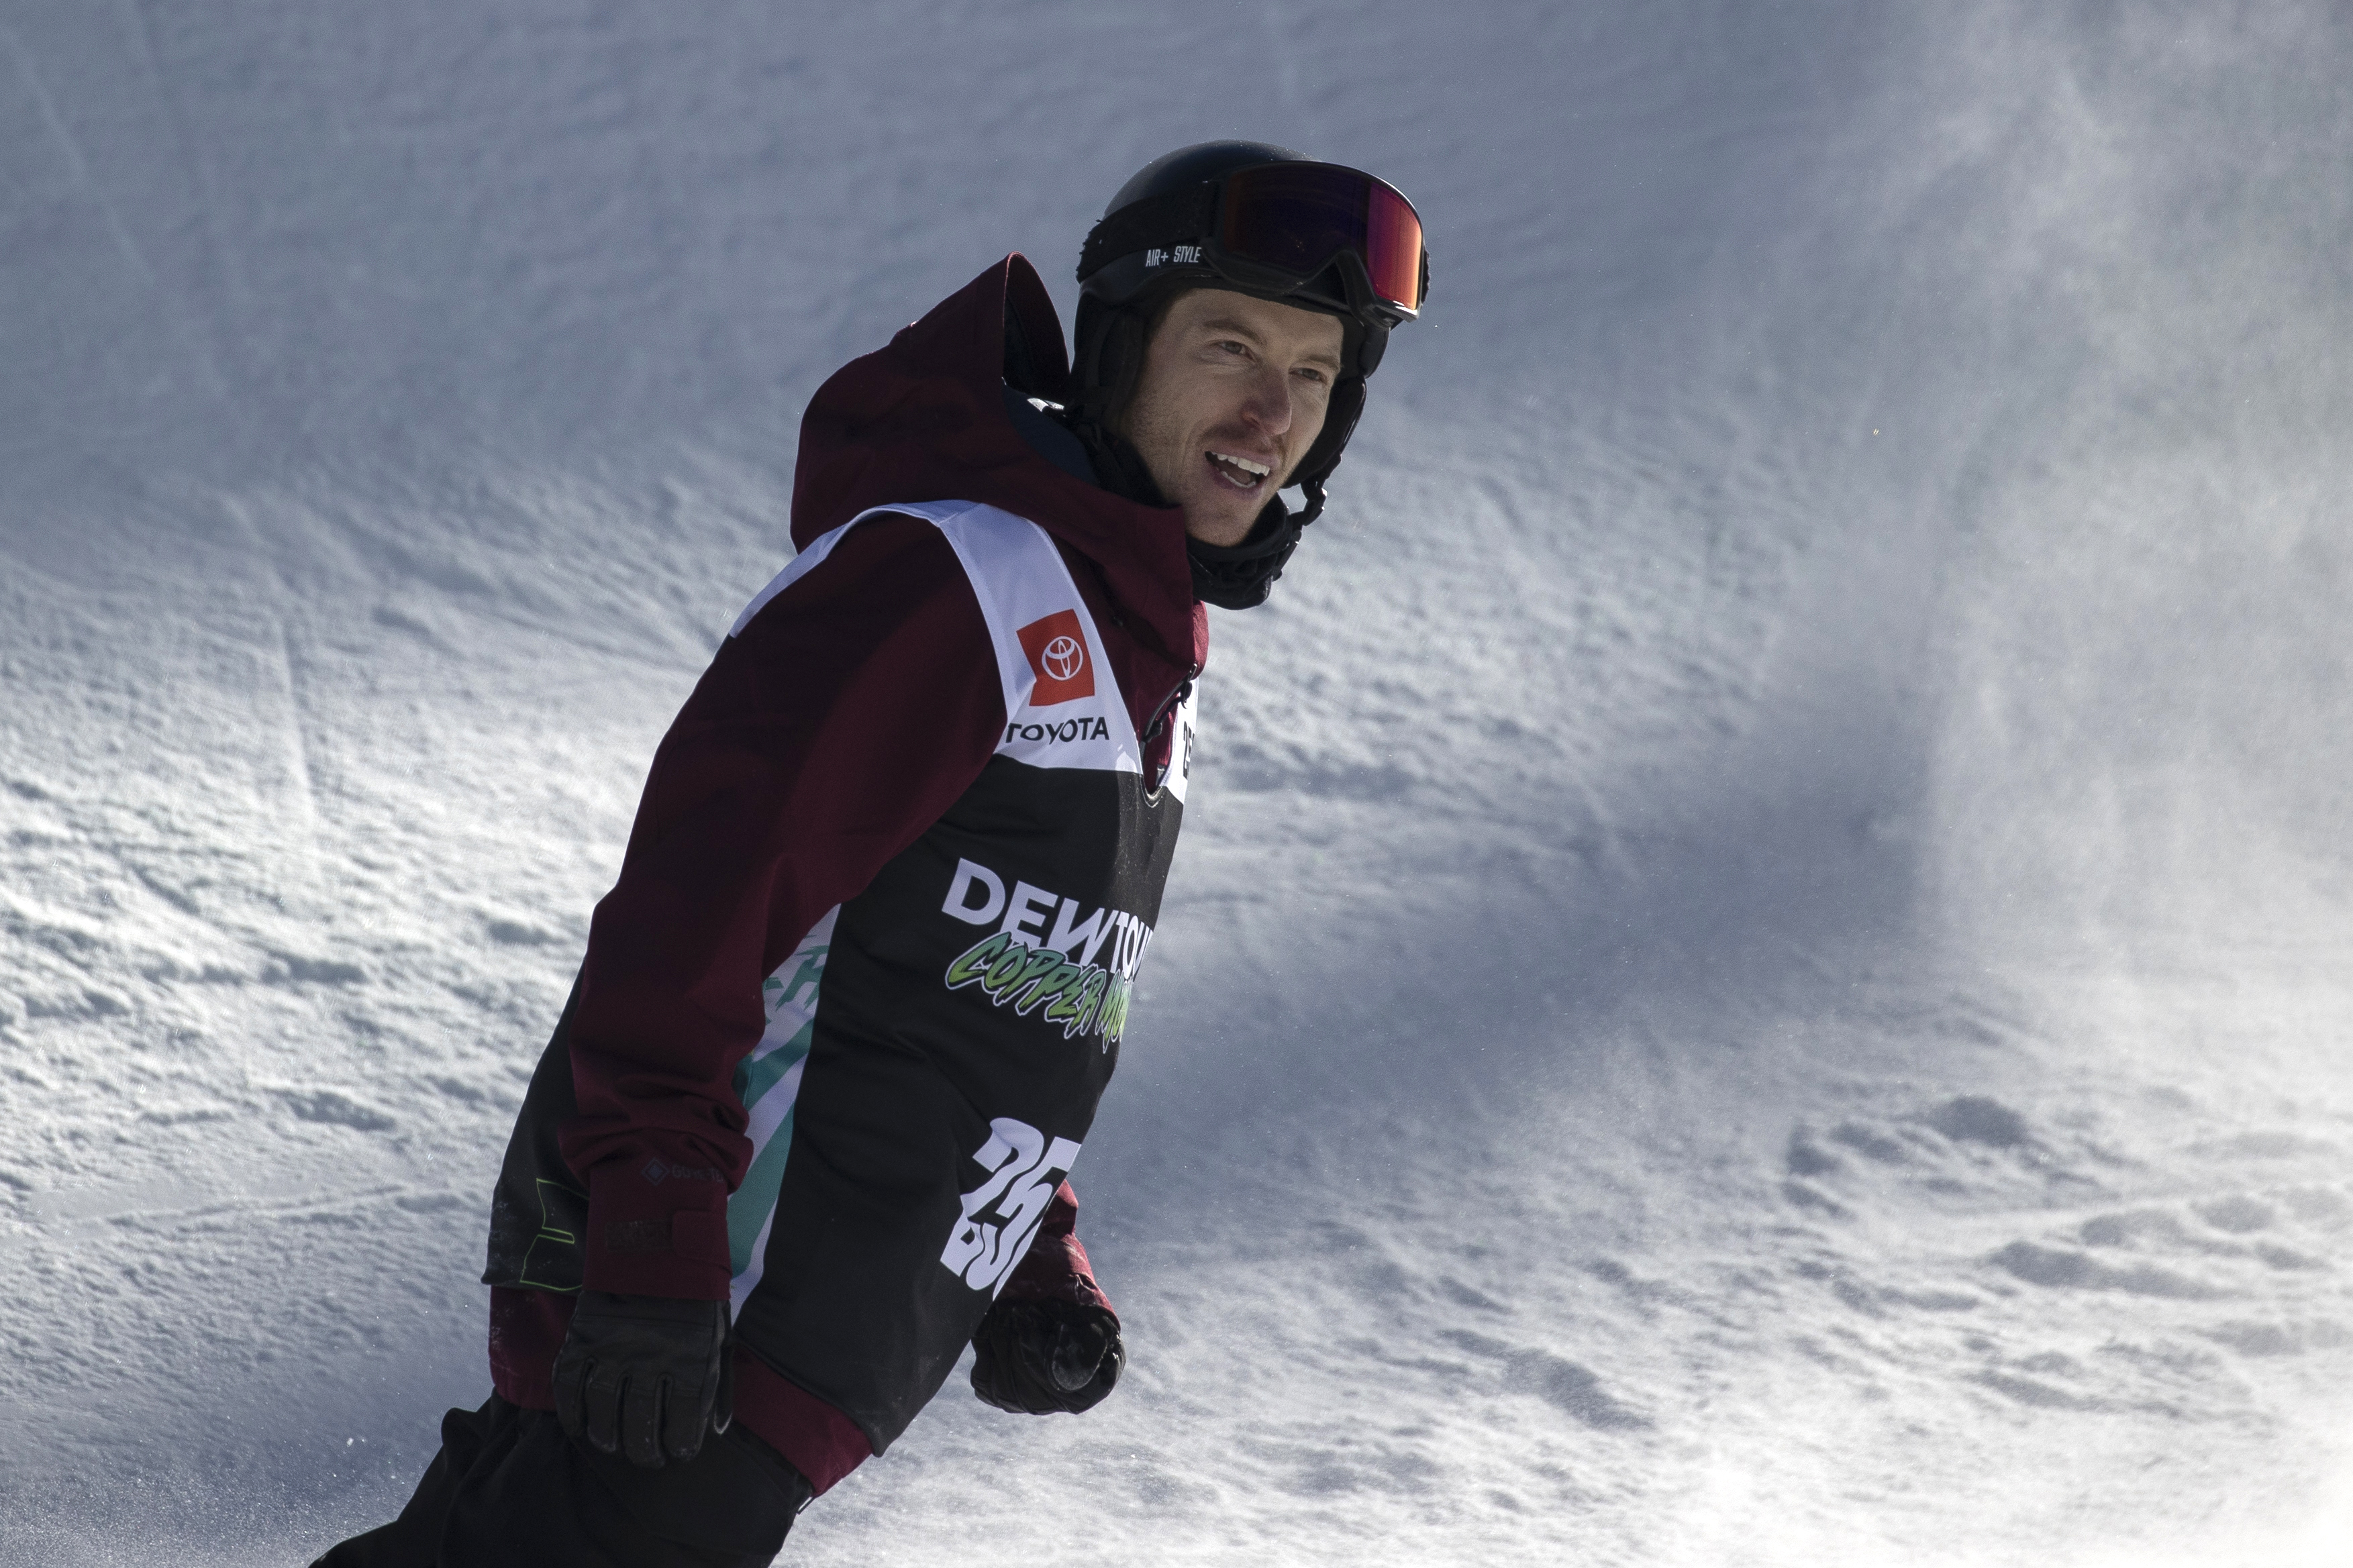 Shaun White Secures 1st Snowboard Halfpipe Podium Since 2018